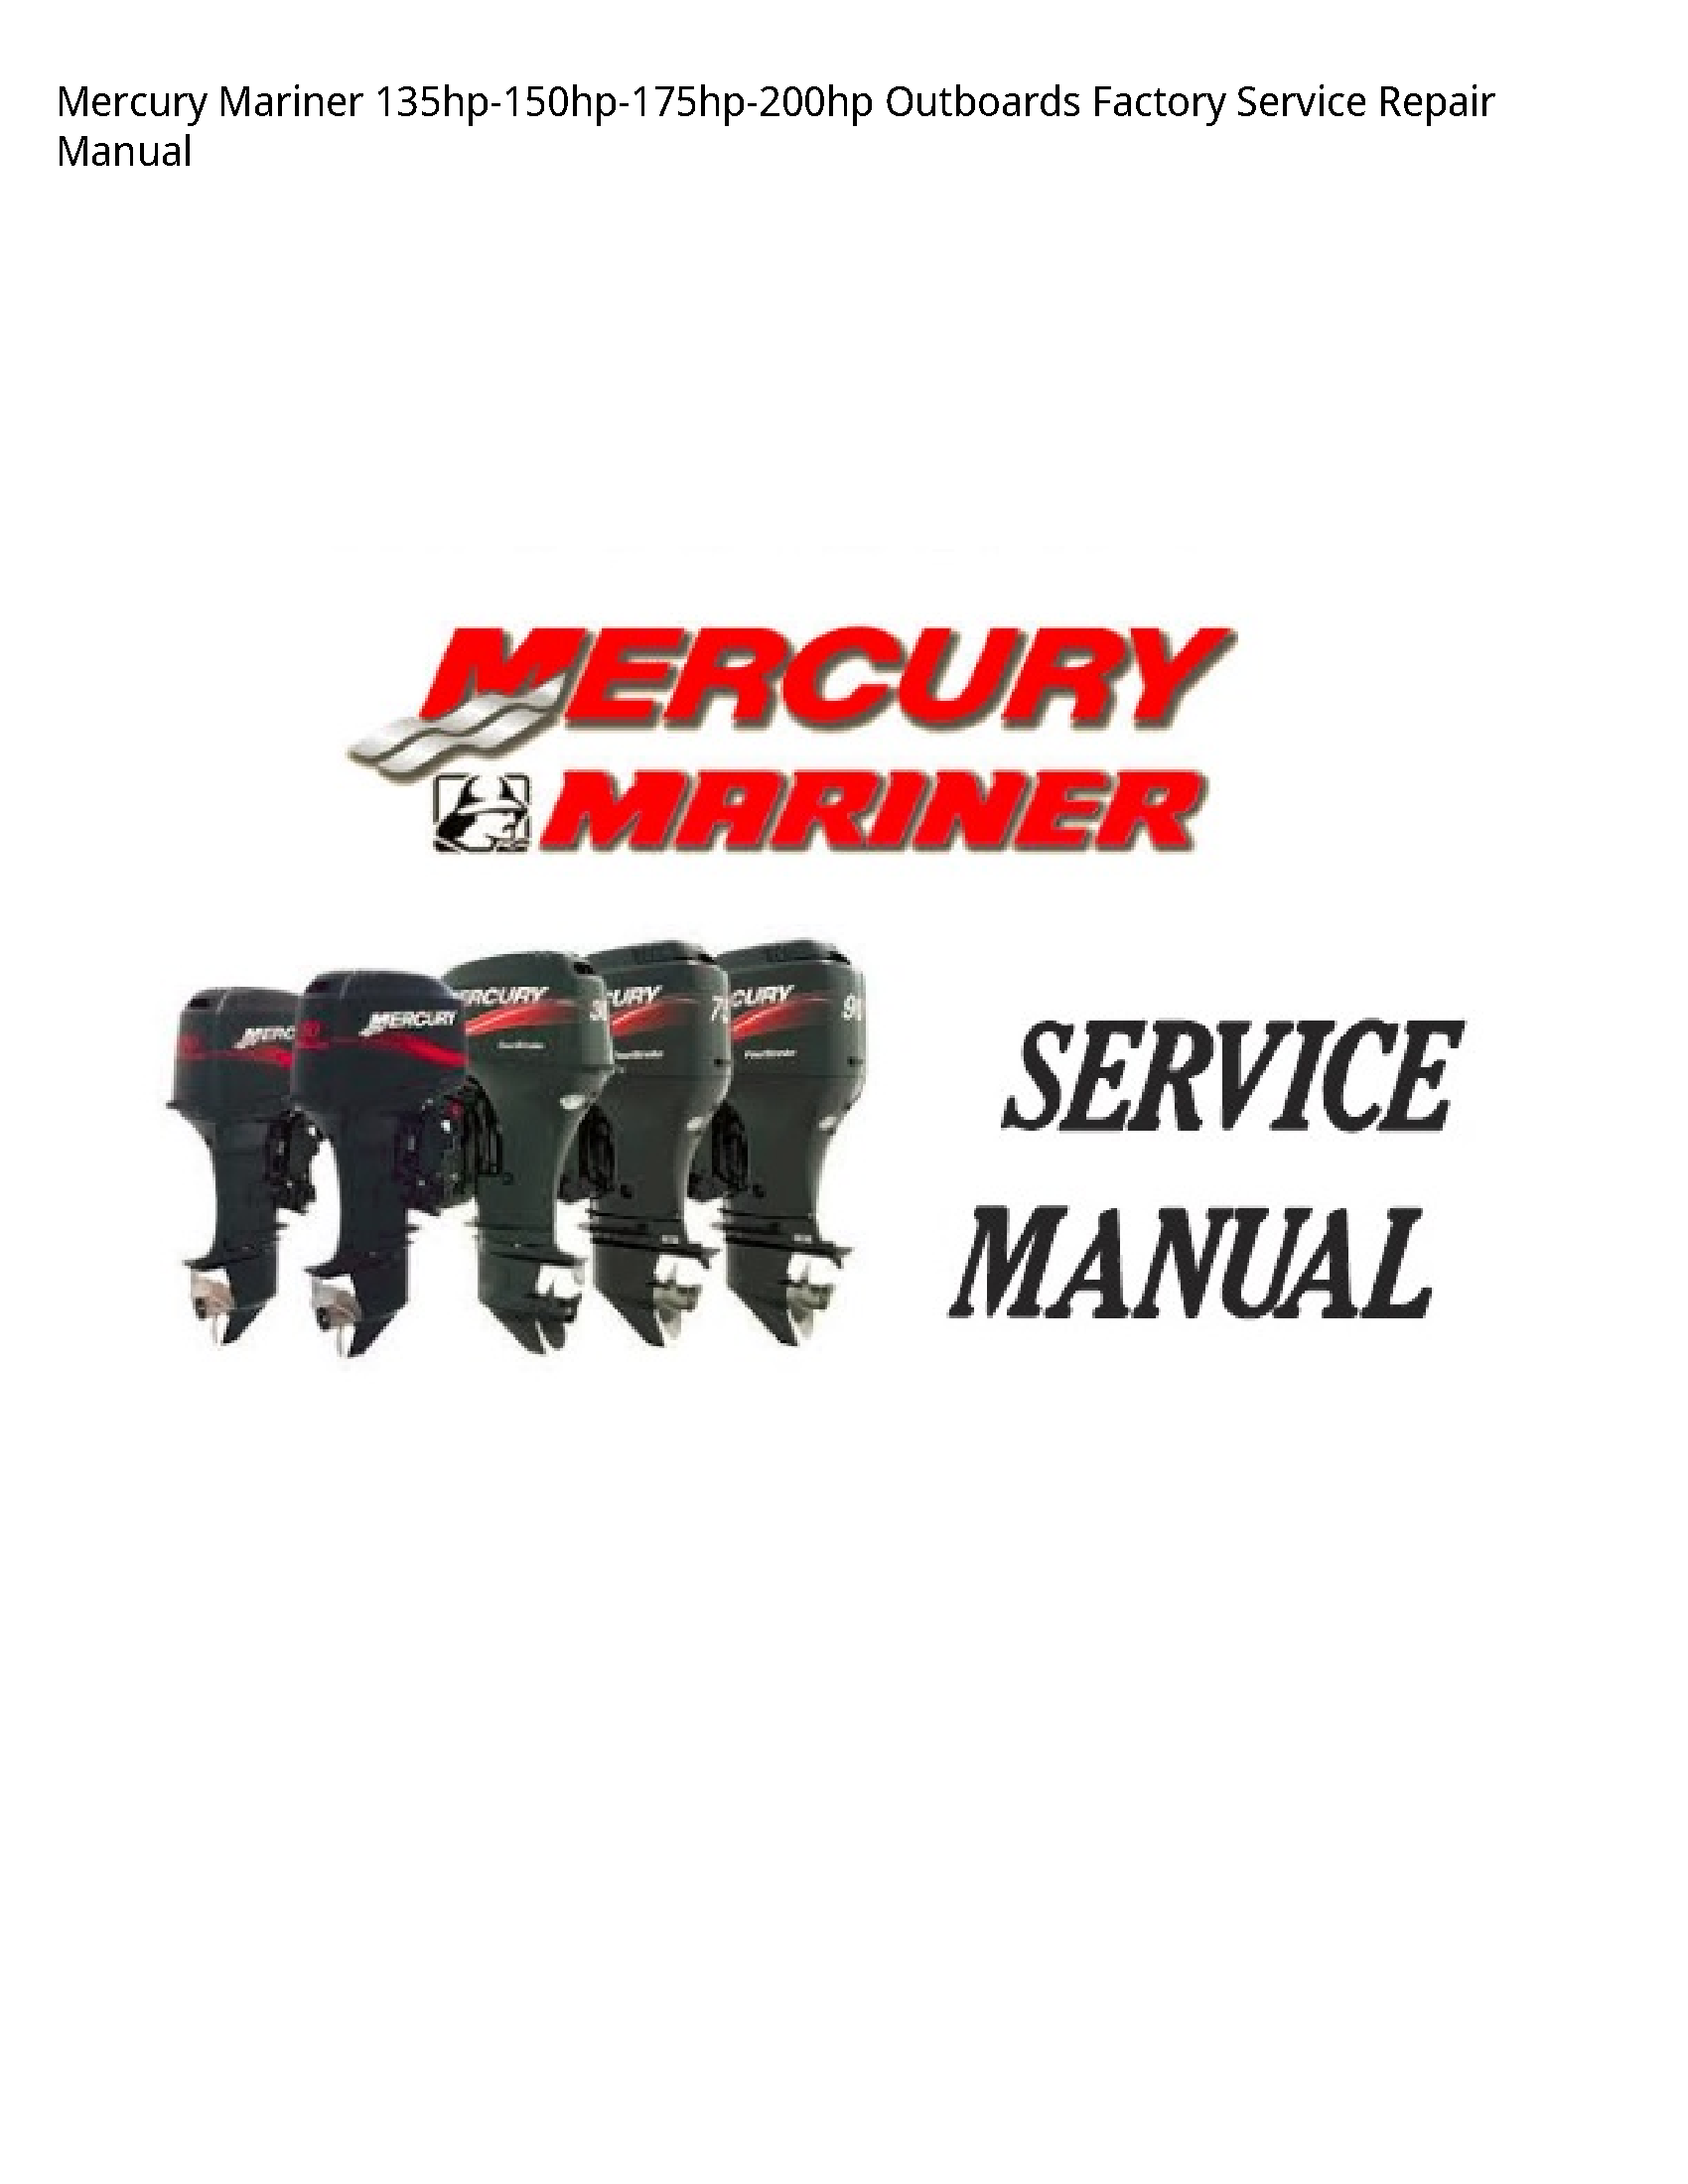 Mercury Mariner 135hp-150hp-175hp-200hp Outboards Factory manual